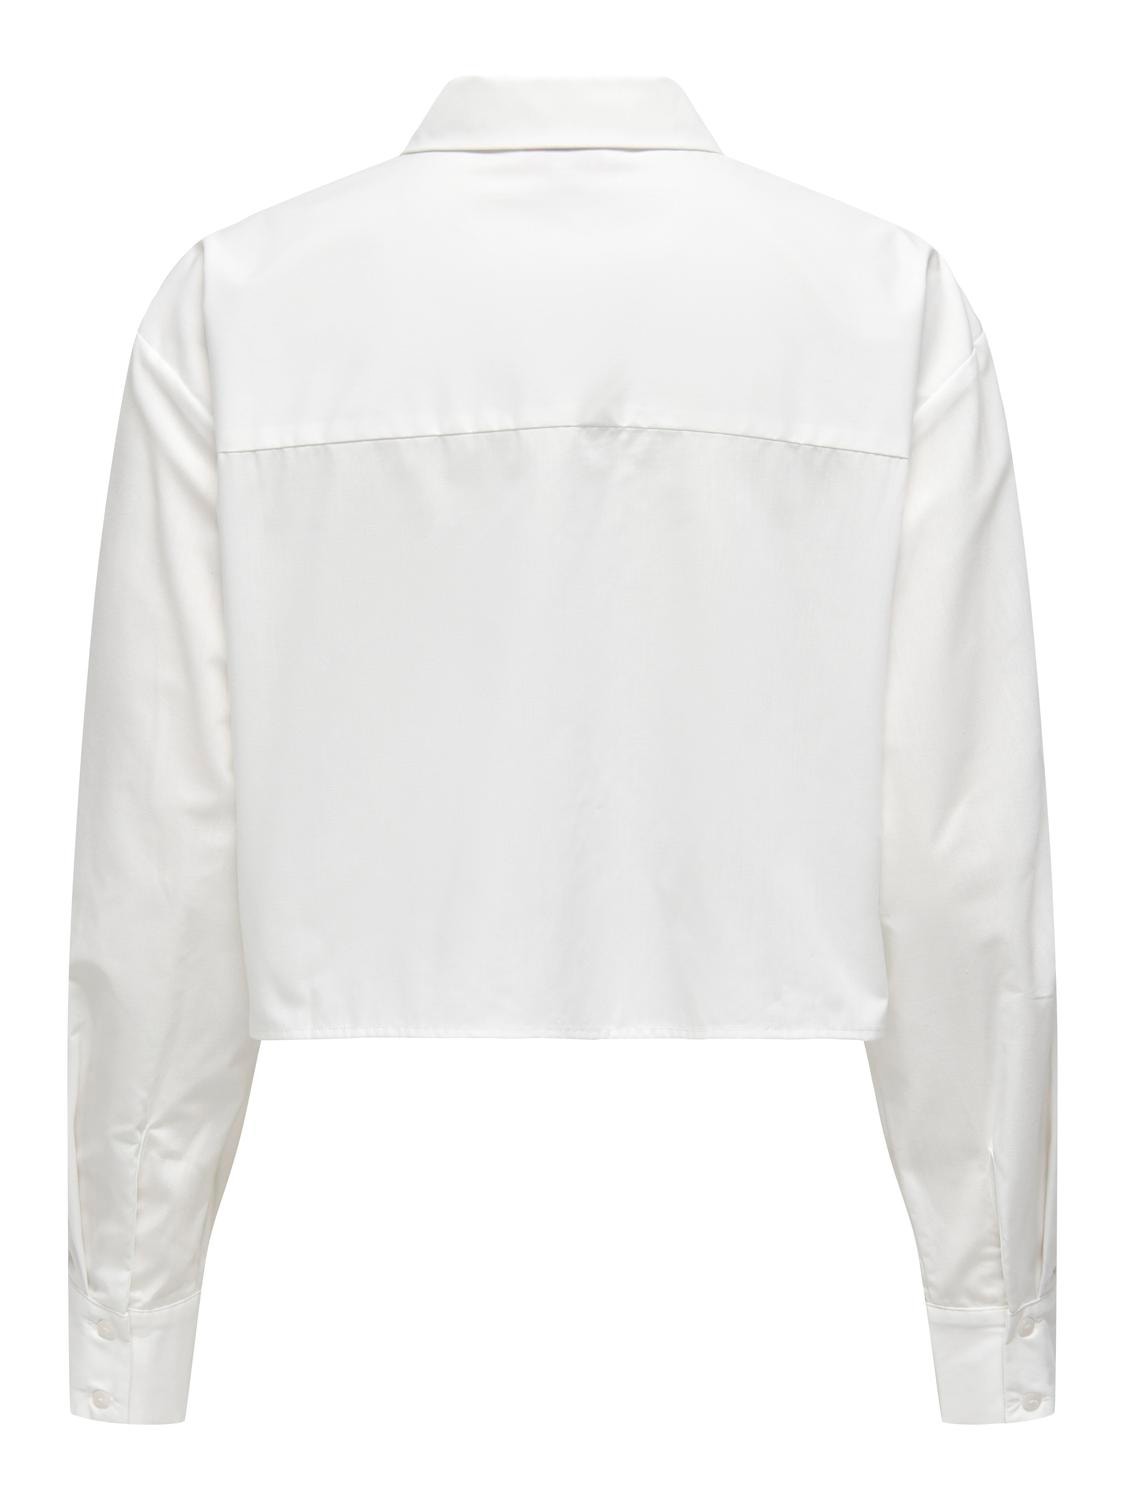 ONLY Cropped skjorte -White - 15327688